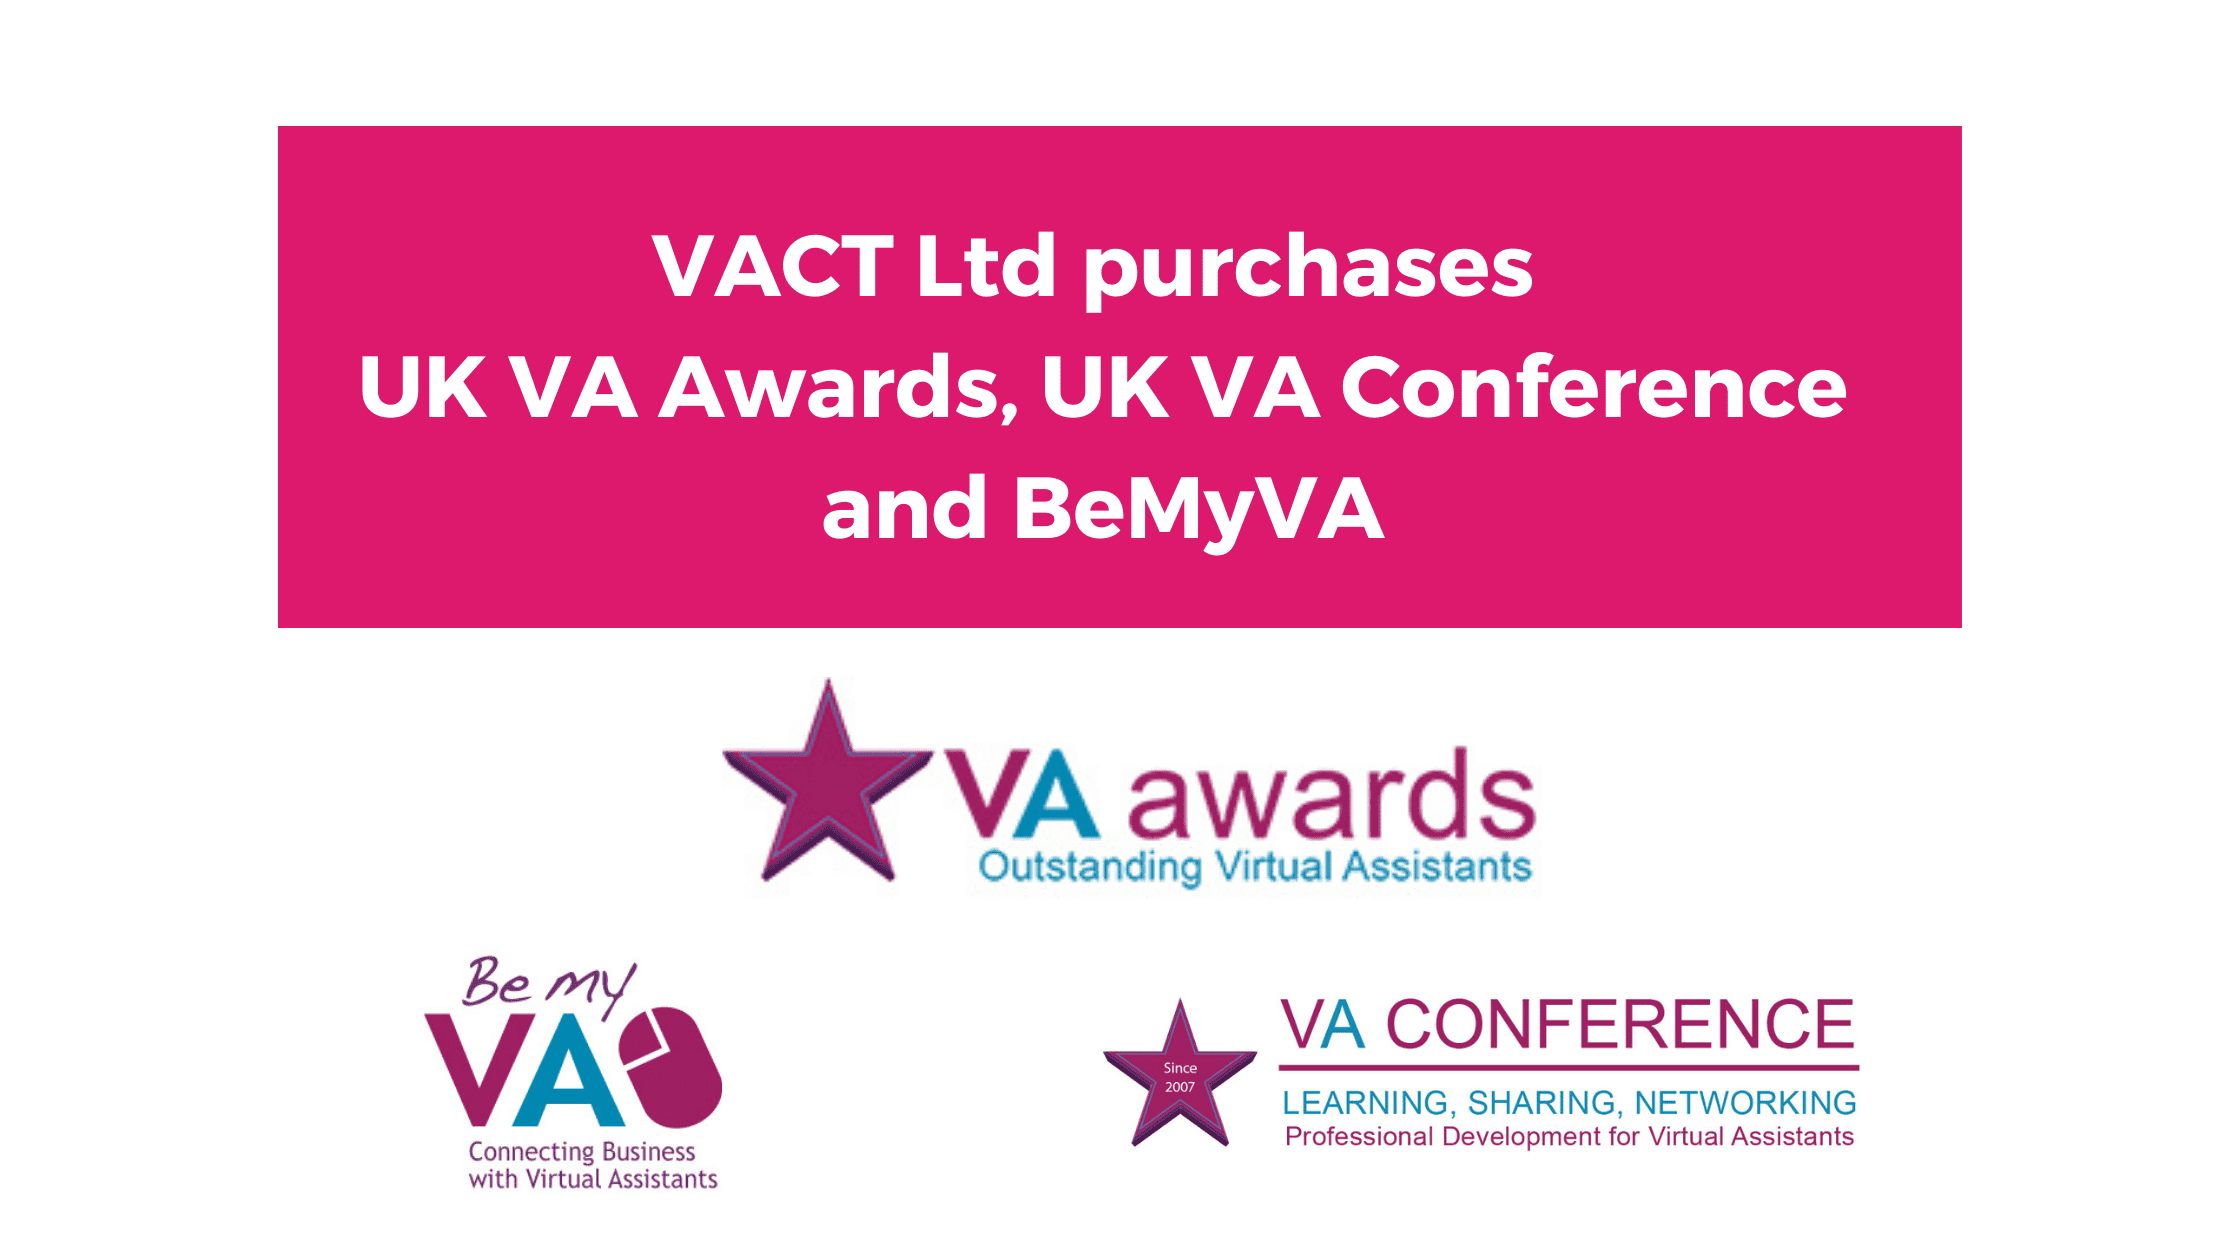 VACT Ltd purchases UK VA Awards, UK VA Conference and BeMyVA